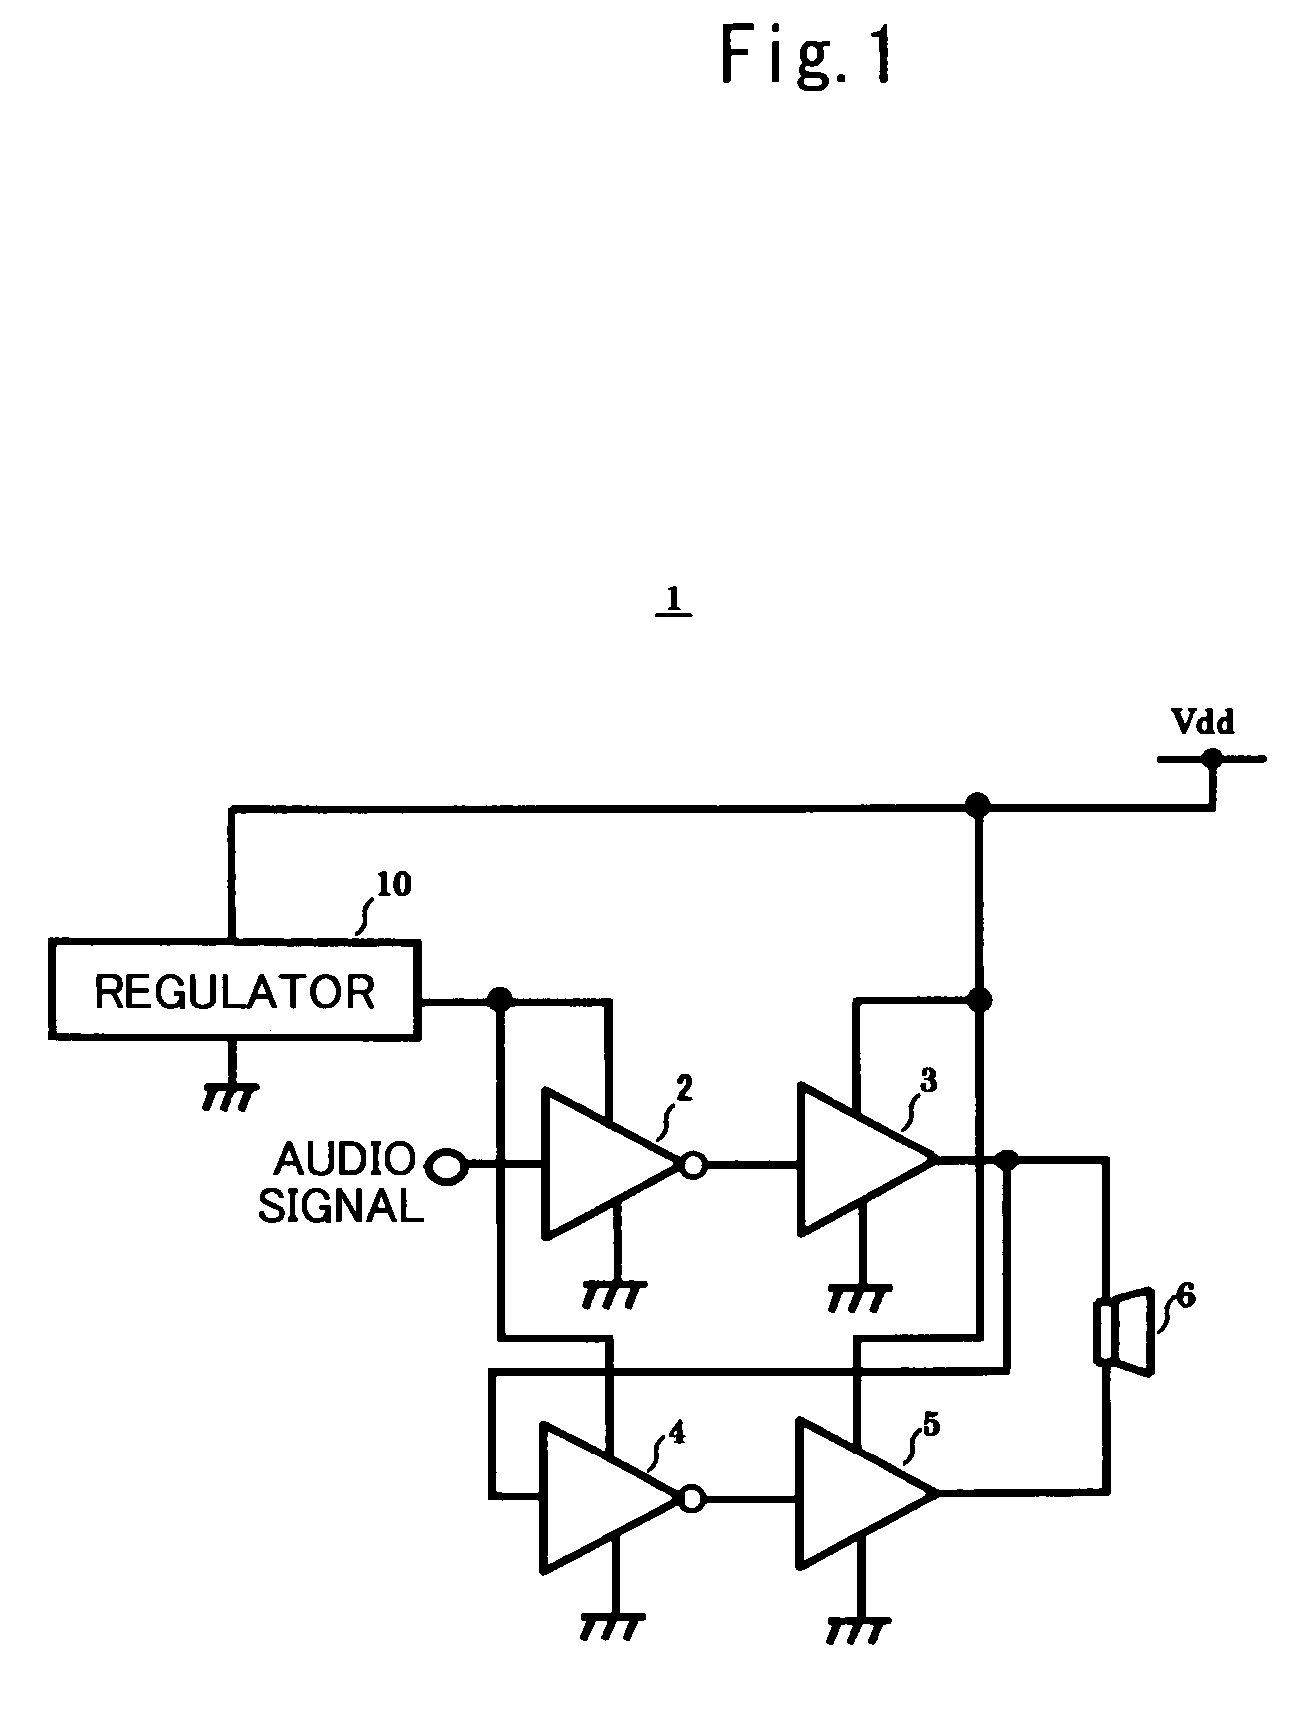 Audio signal output device